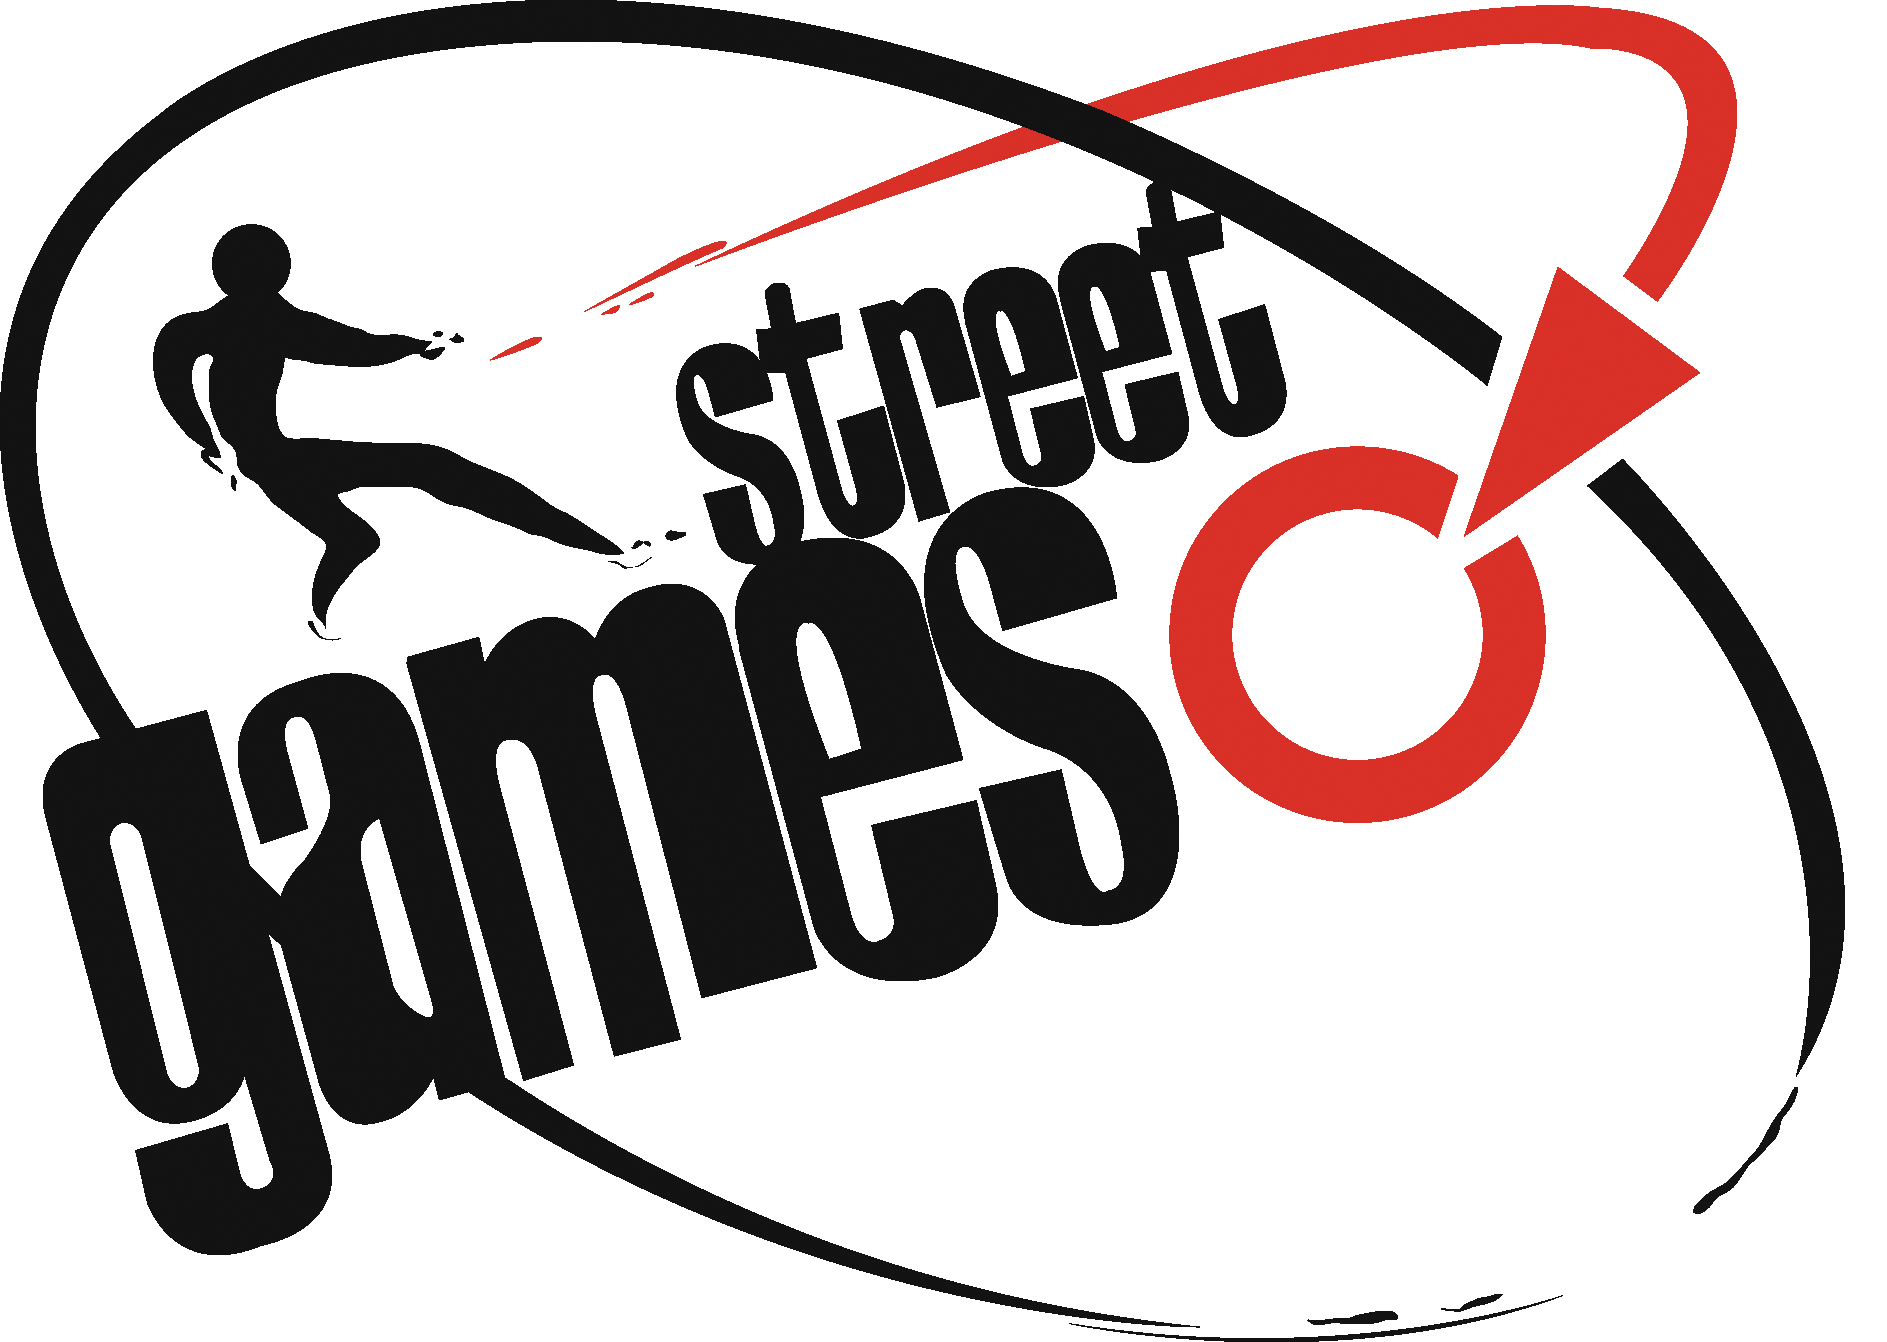 Street Games logo.jpg